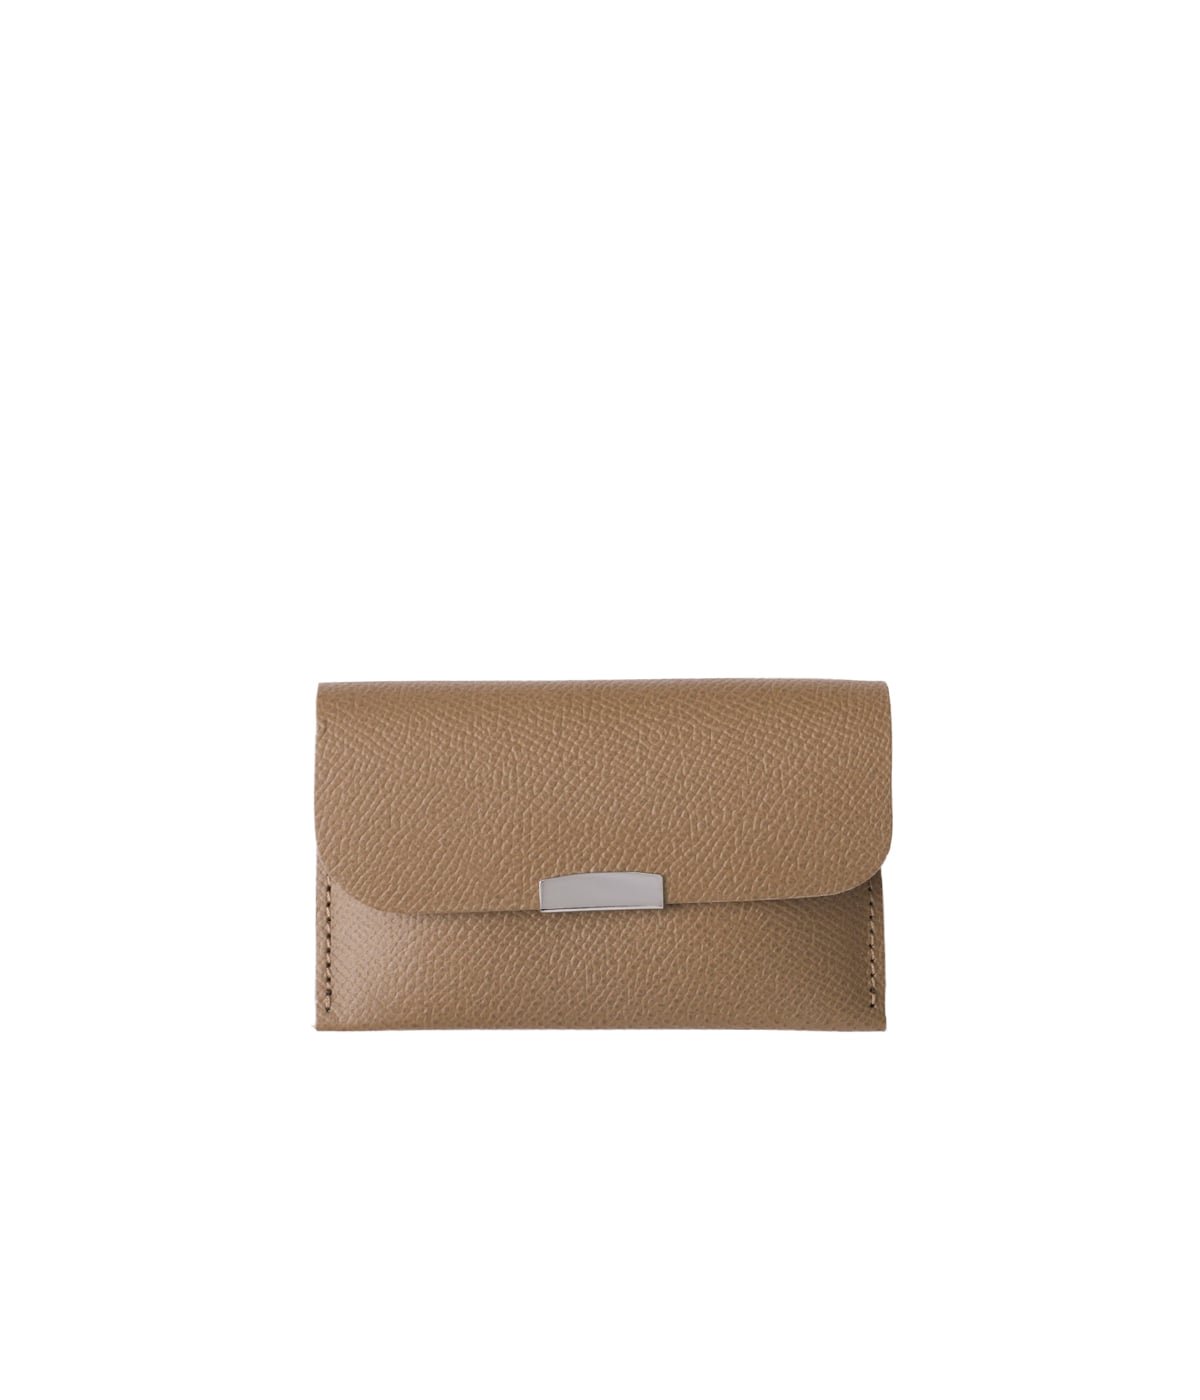 CARD CASE - Calf leather